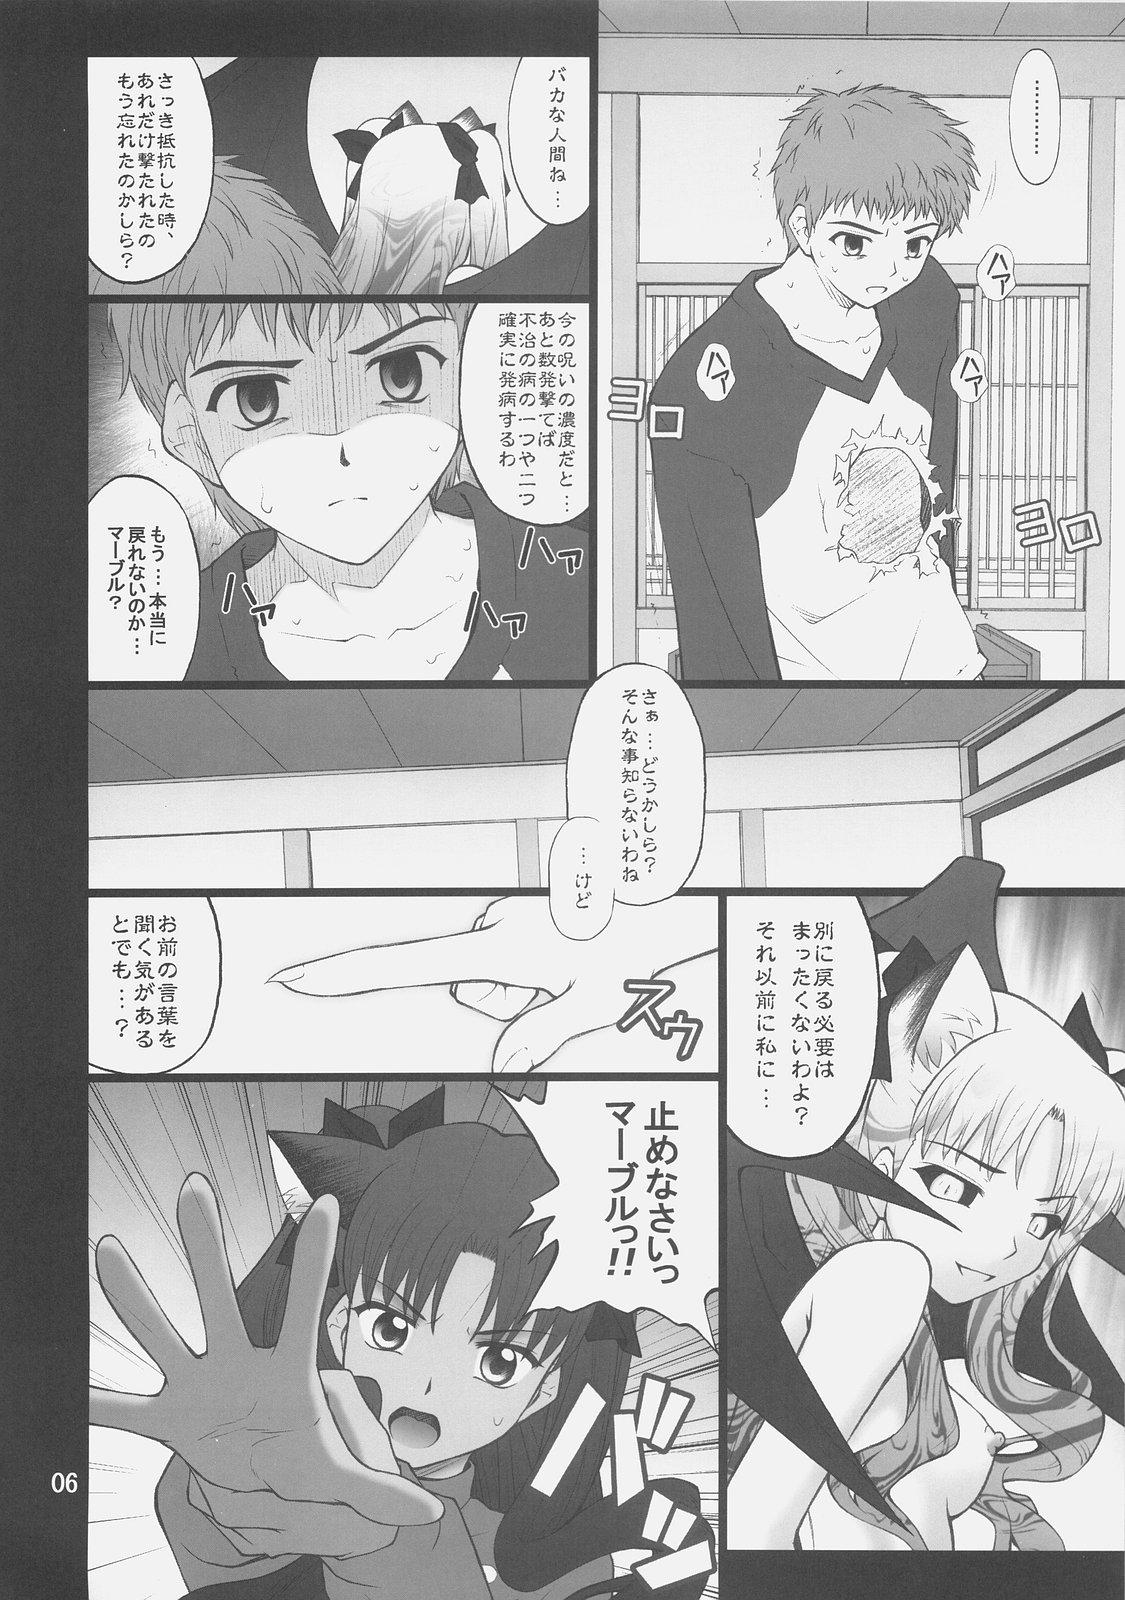 Bigtits Grem-Rin 4 - Fate stay night Fate hollow ataraxia Lesbians - Page 5